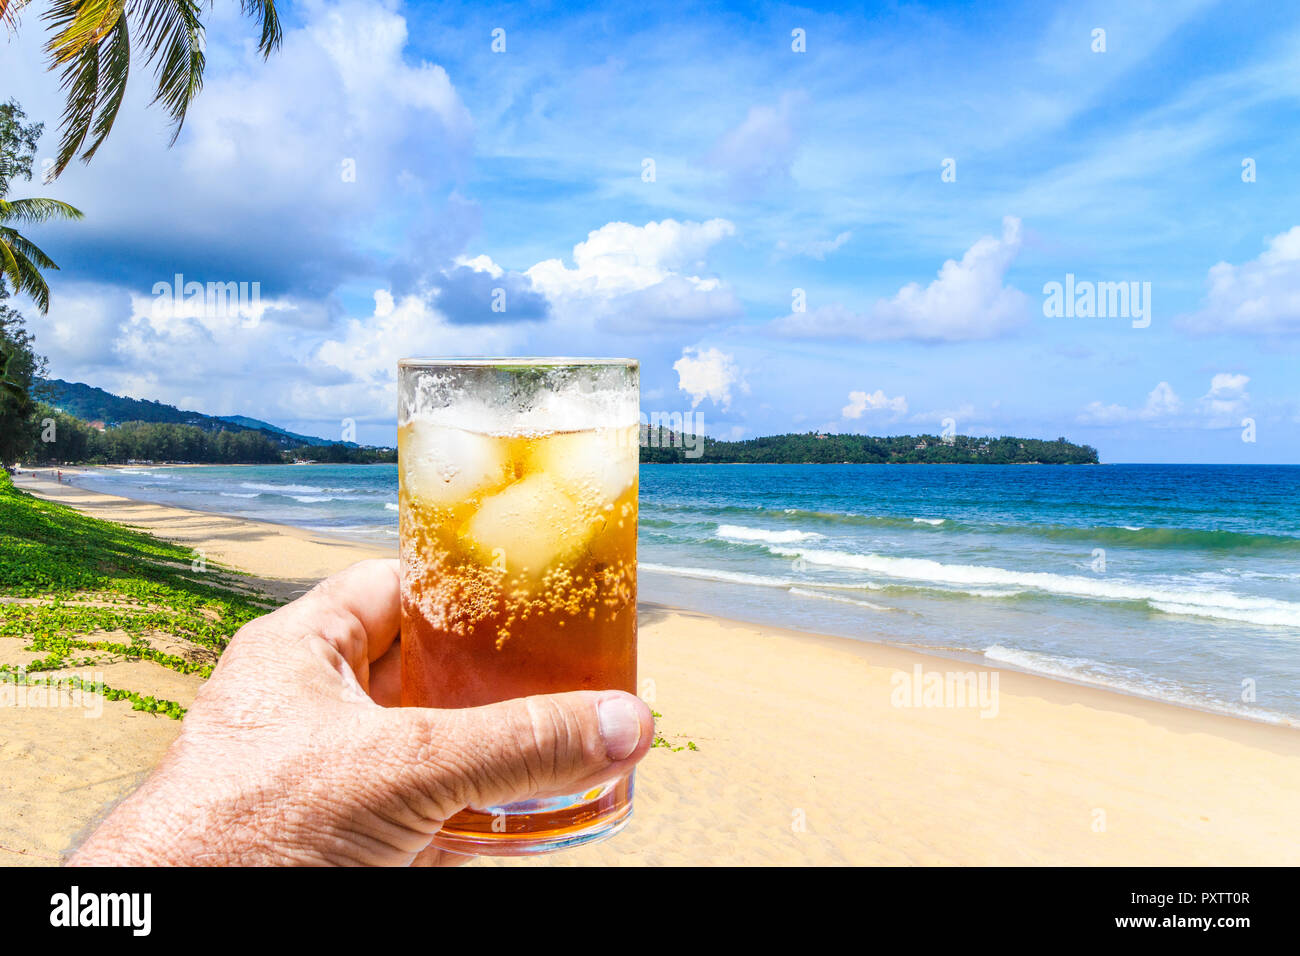 https://c8.alamy.com/comp/PXTT0R/hand-holding-a-rum-and-coke-cocktail-in-glass-with-ice-bang-tao-beach-phuket-thailand-PXTT0R.jpg